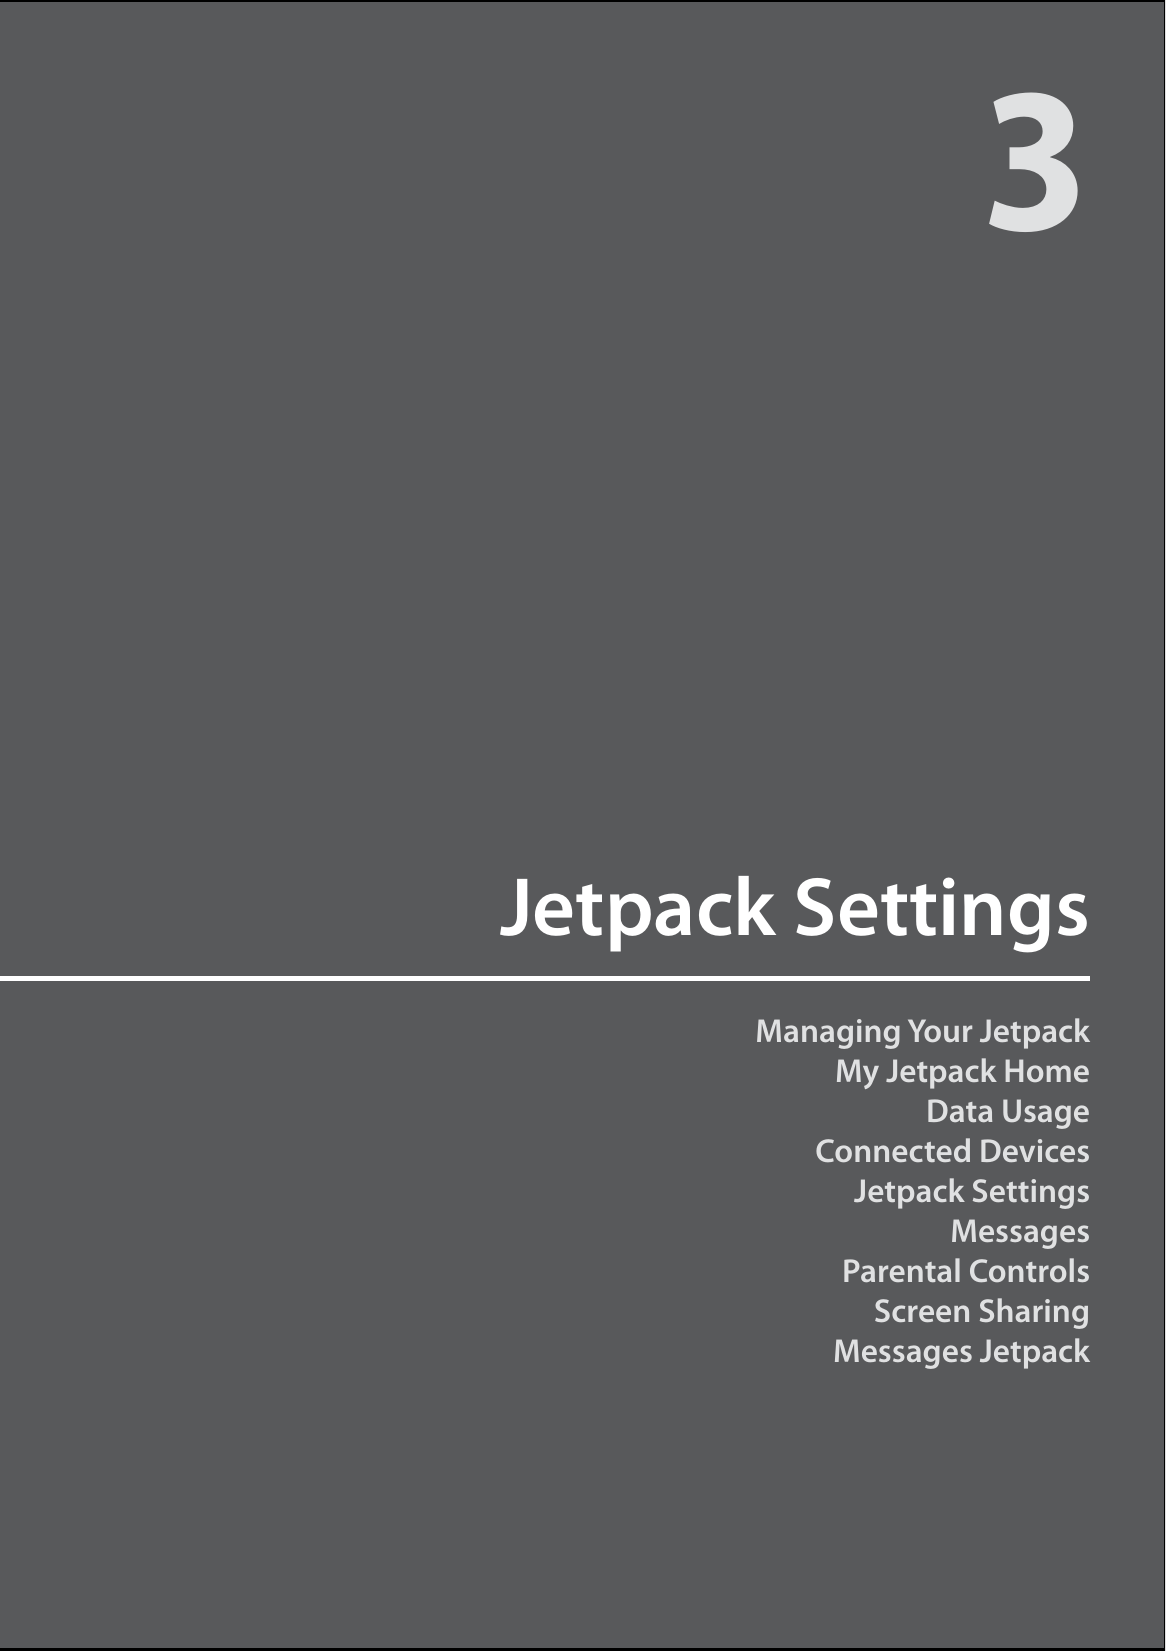 Managing Your JetpackMy Jetpack HomeData UsageConnected DevicesJetpack SettingsMessagesParental ControlsScreen SharingMessages JetpackJetpack Settings3